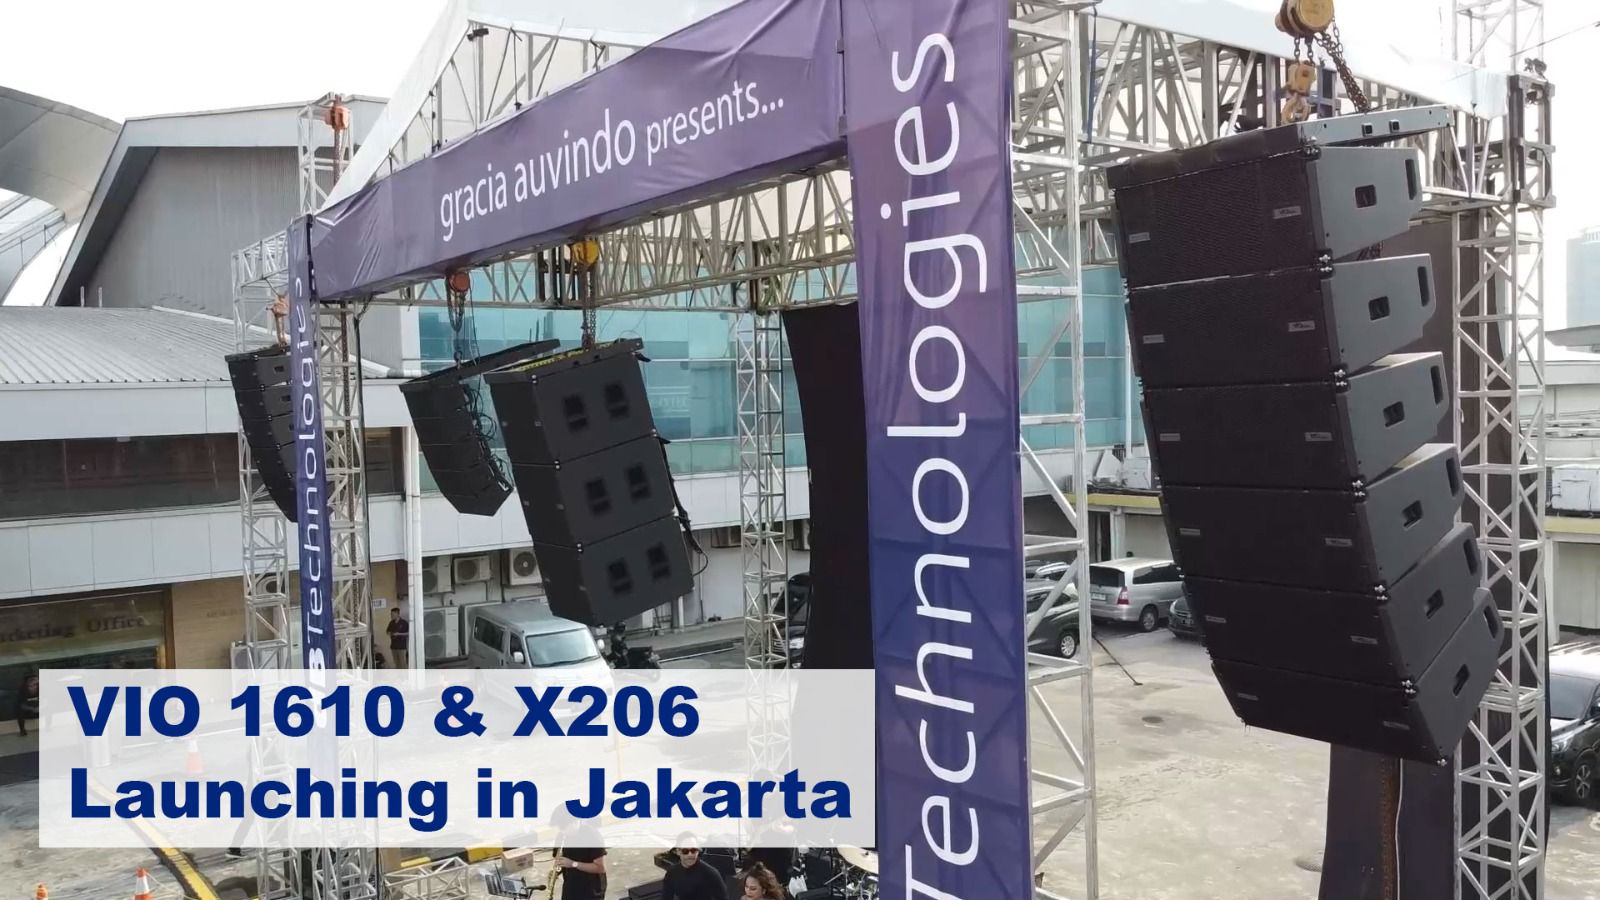 Gracia Auvindo & dBTechnologies Launch VIO1610 in Jakarta